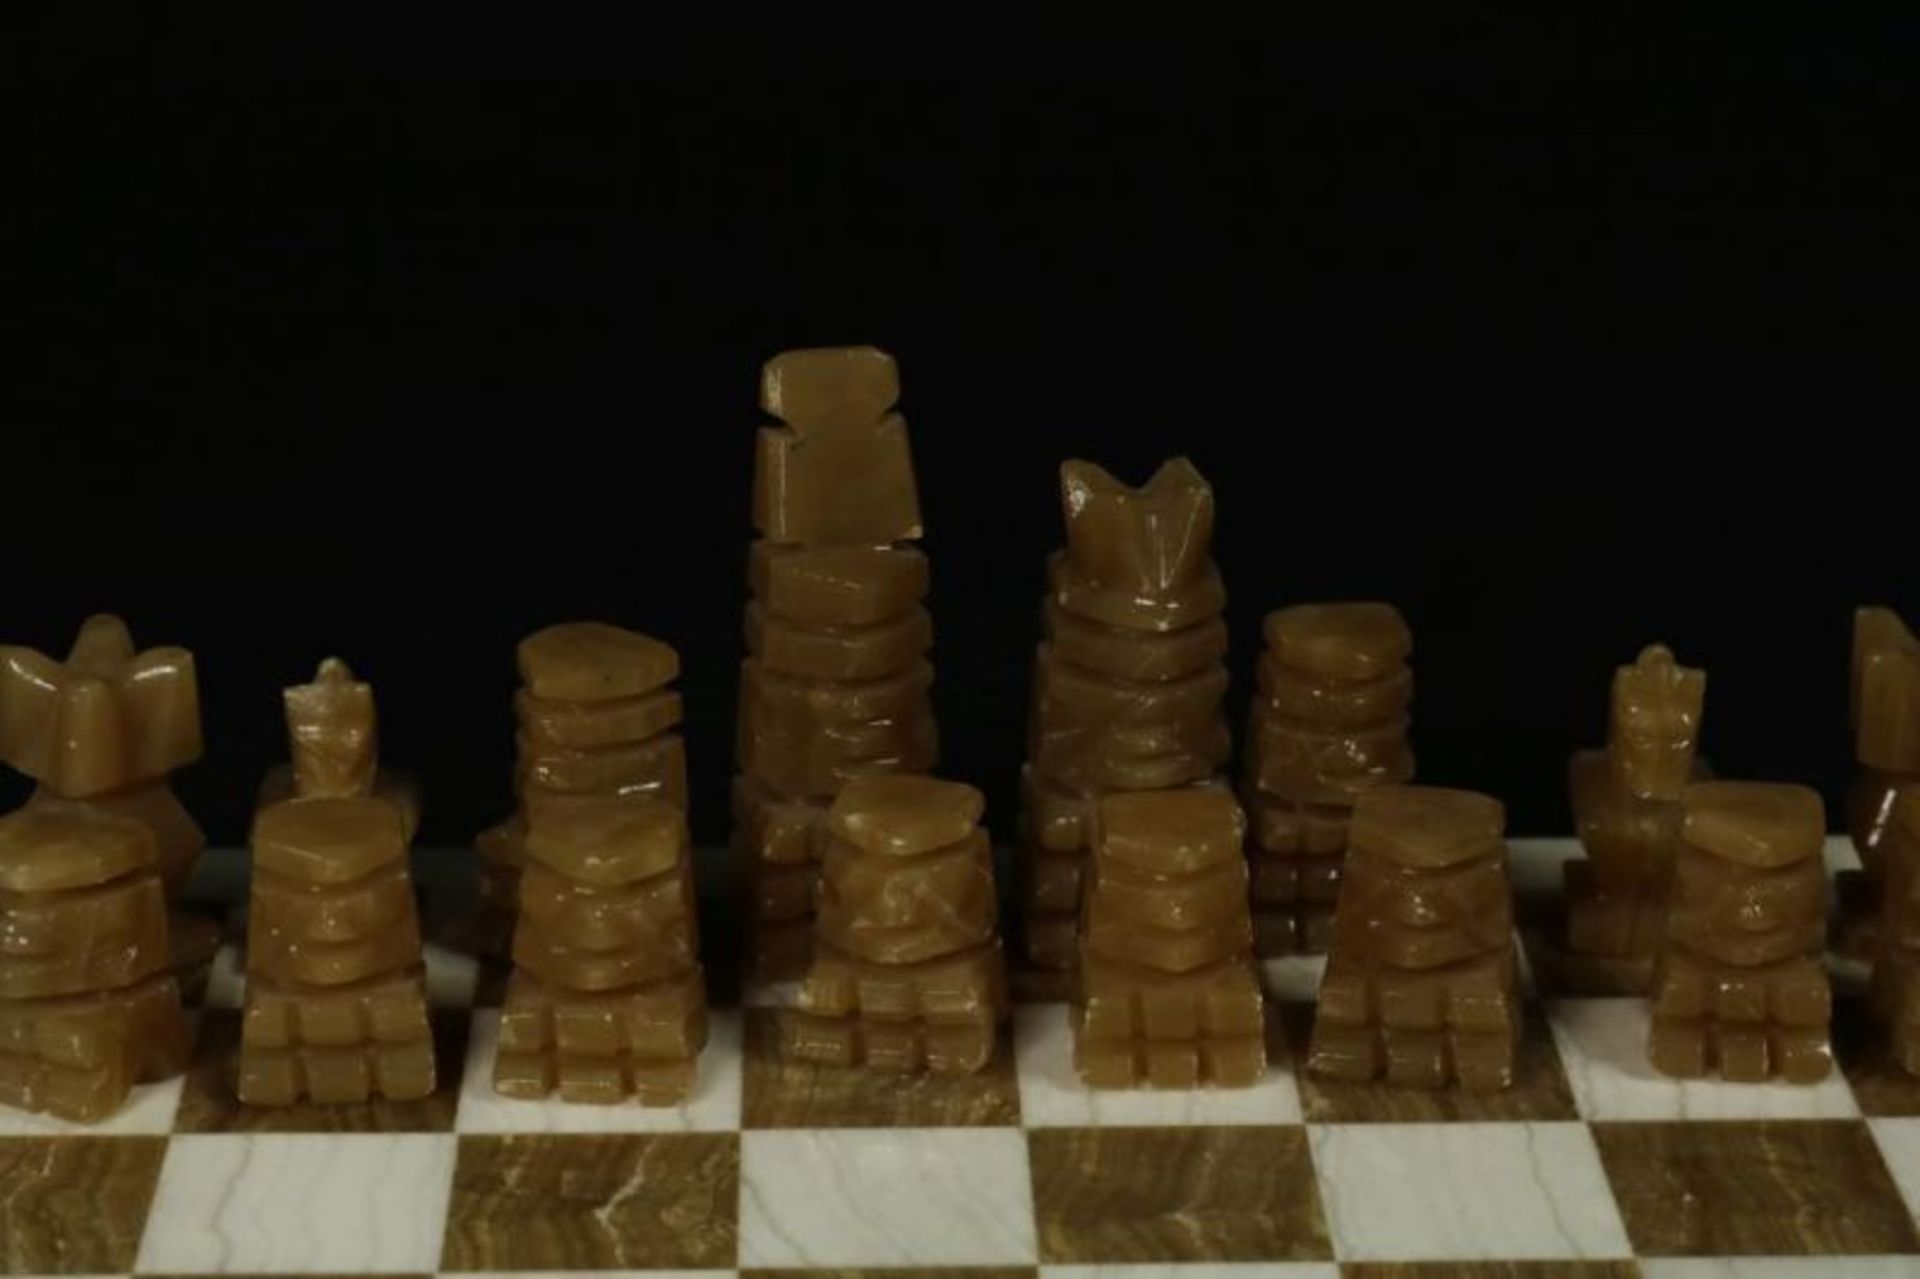 Albasten schaakbord met stukken. - Bild 2 aus 2